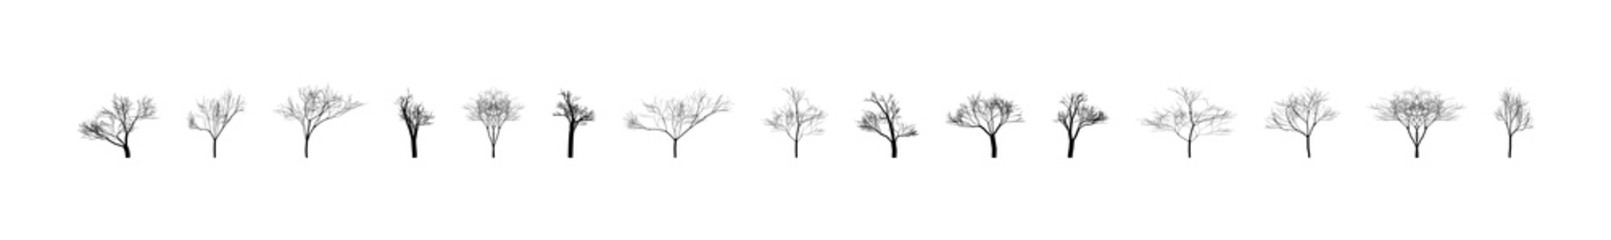 Trees. Bare trees. Template bare trees for winter design. Tree in flat design. Vector illustration